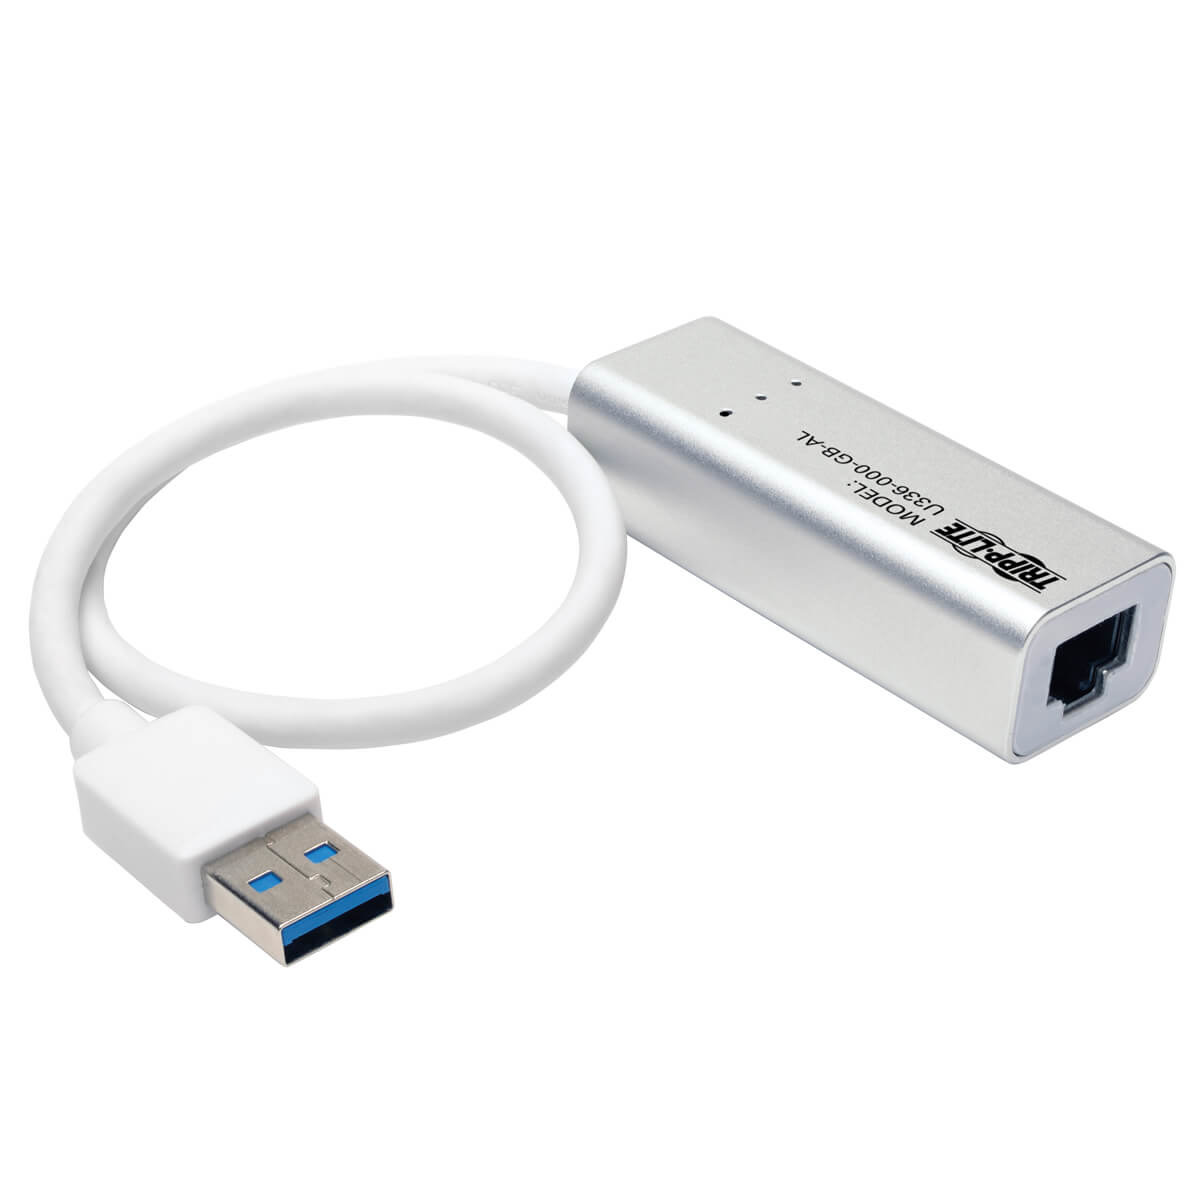 USB 3.0 SuperSpeed to Gigabit Adapter